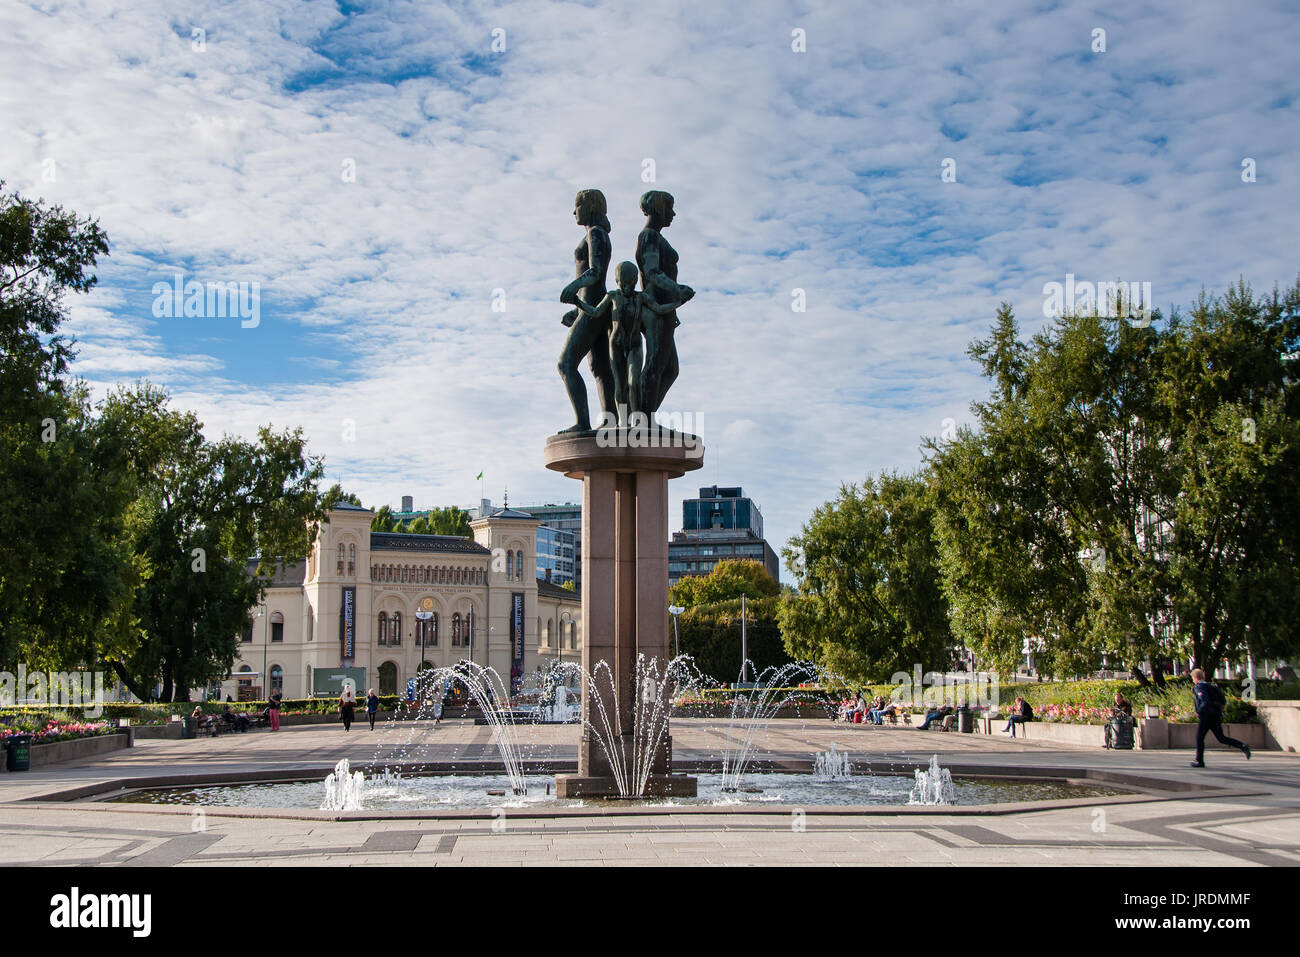 Oslo, Norway - September 23, 2013: Statue and fountain in Radhusplassen ...